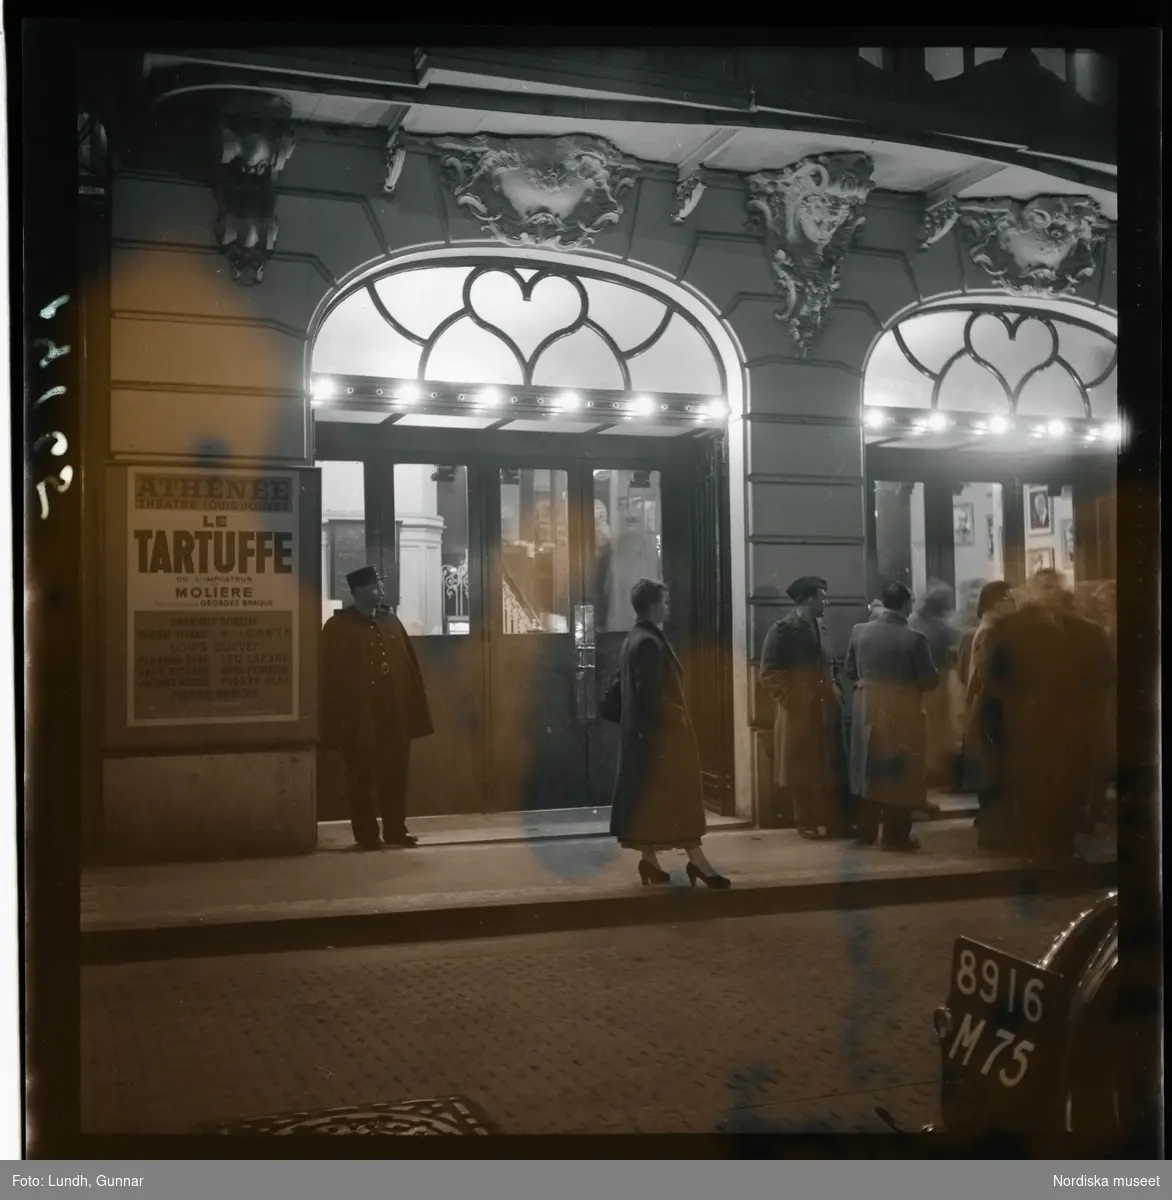 1950. Paris. Utanför Athénée Theatre Louis Jouvet där det spelas Le Tartuffe.